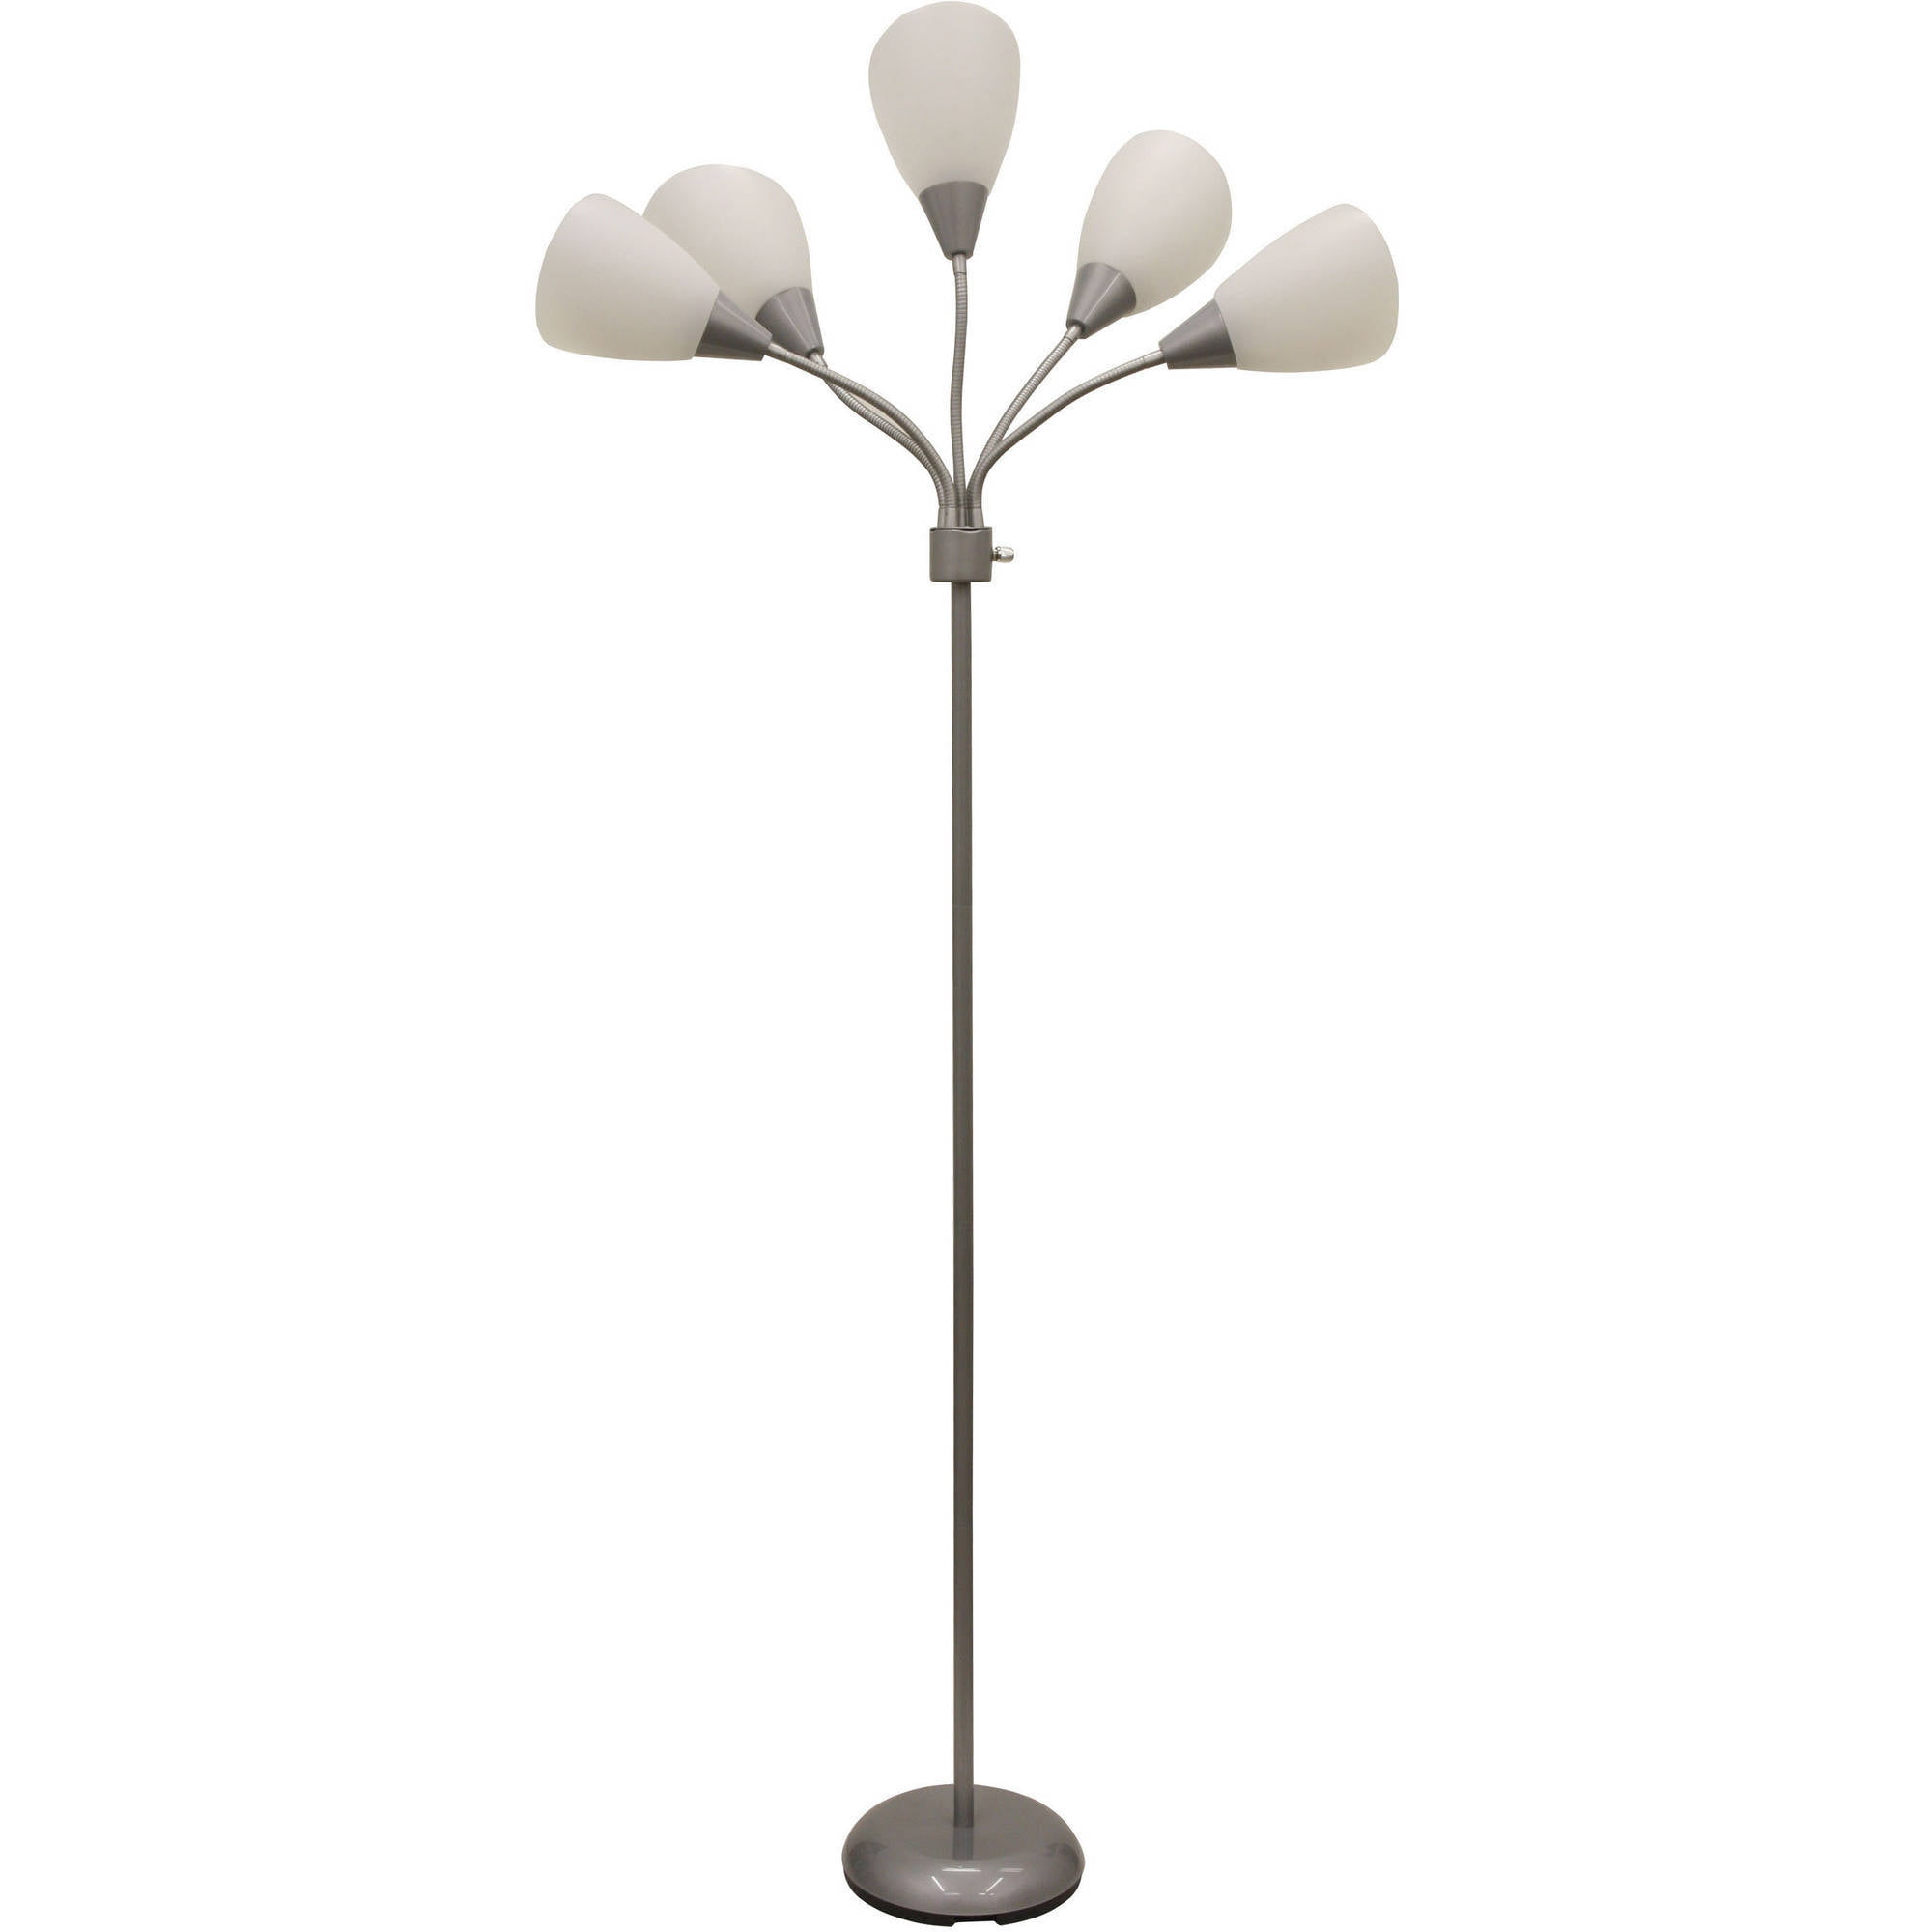 Mainstays 5 Light Multihead Floor Lamp, 5 Bulb Floor Lamp Replacement Shades